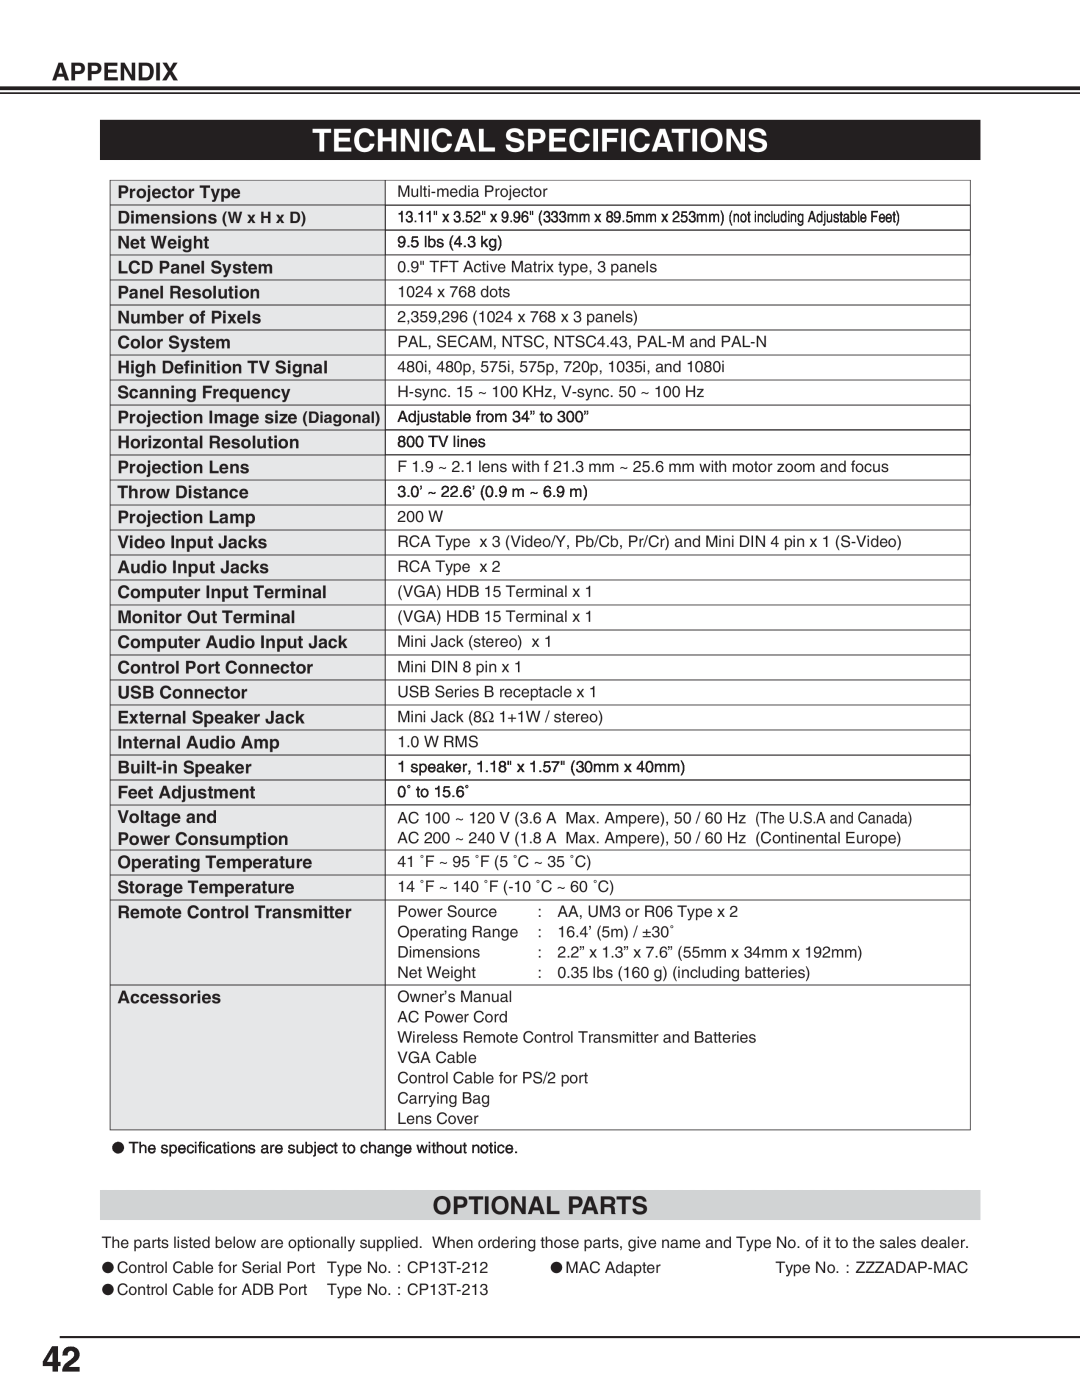 BOXLIGHT cp-305t manual Technical Specifications, Optional Parts, Appendix 